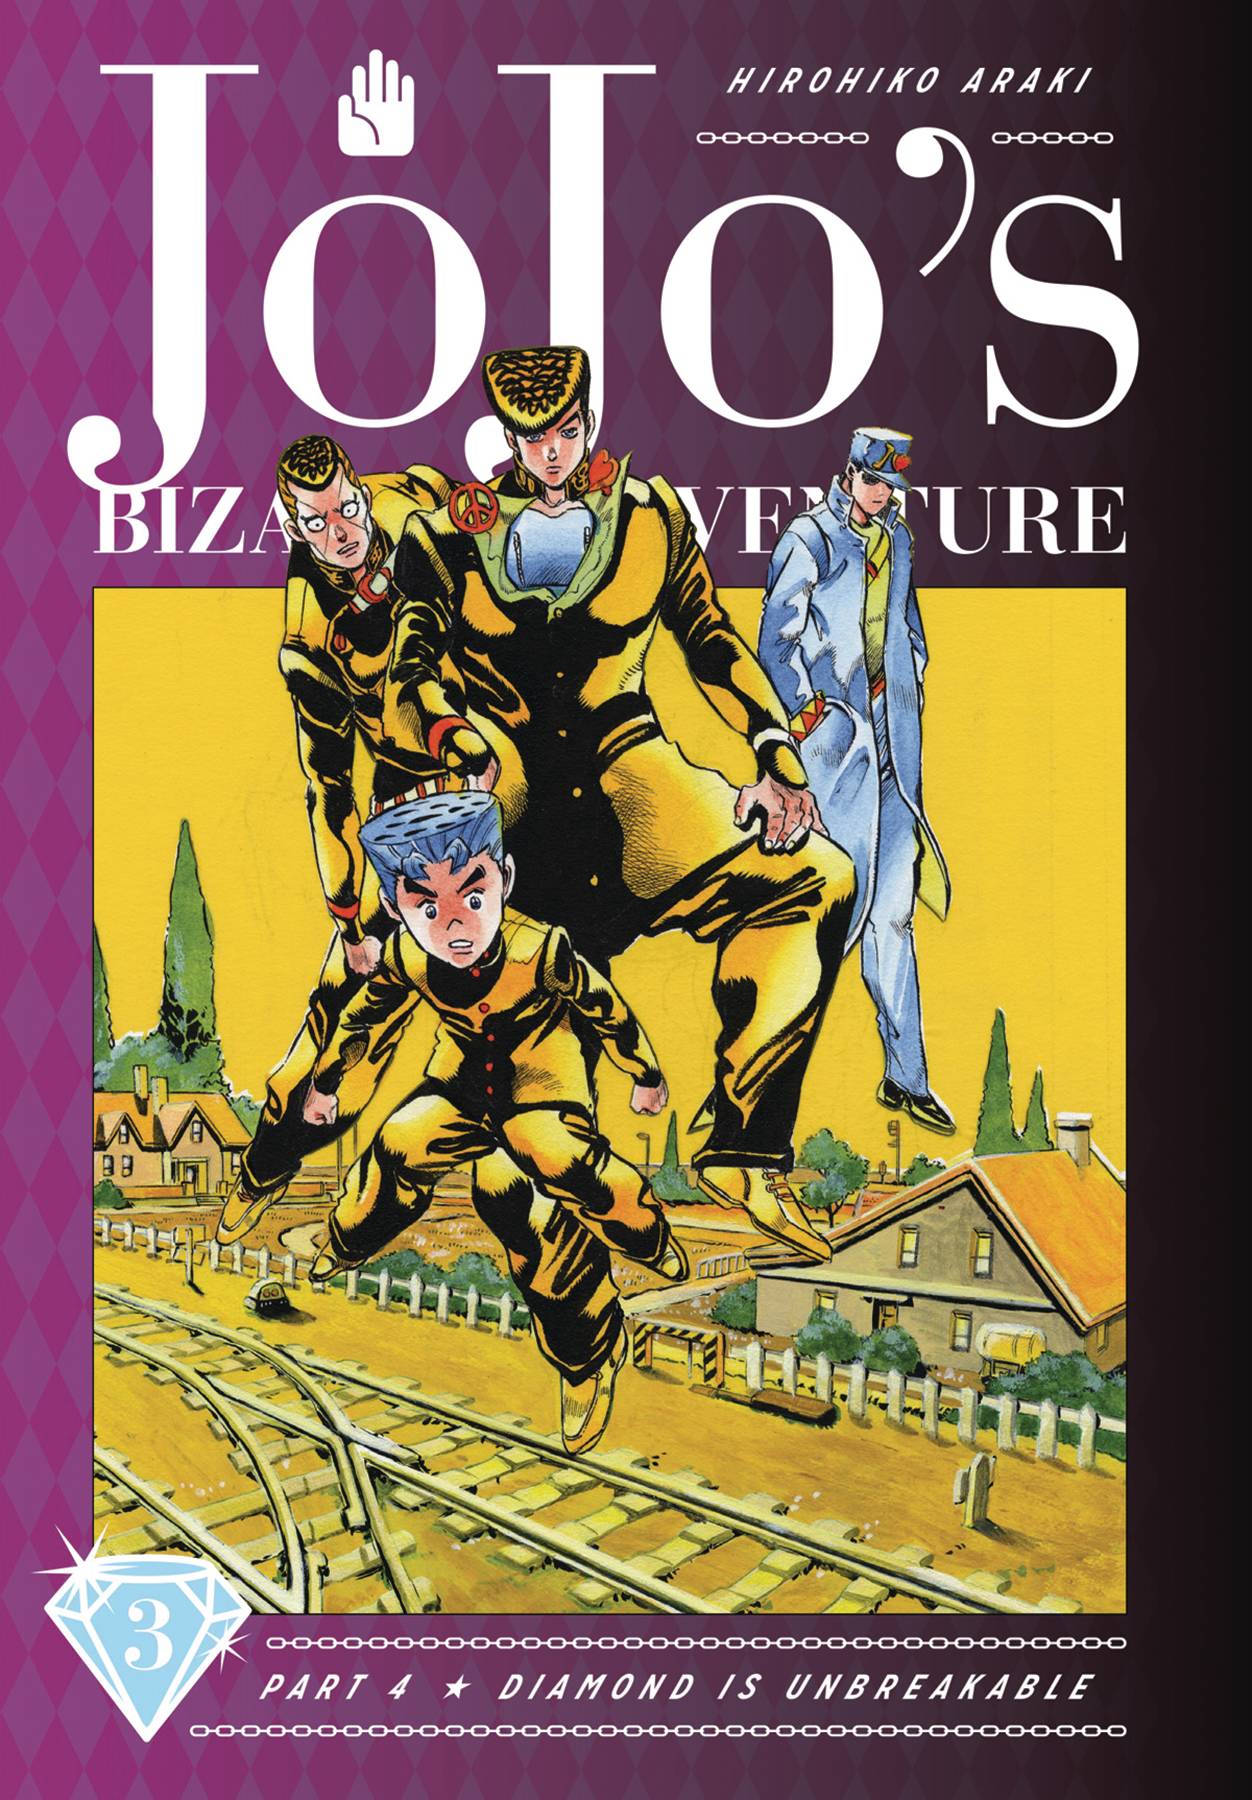 Jojos Bizarre Adventure 4 Diamond Is Unbreakable Hardcover Volume 3